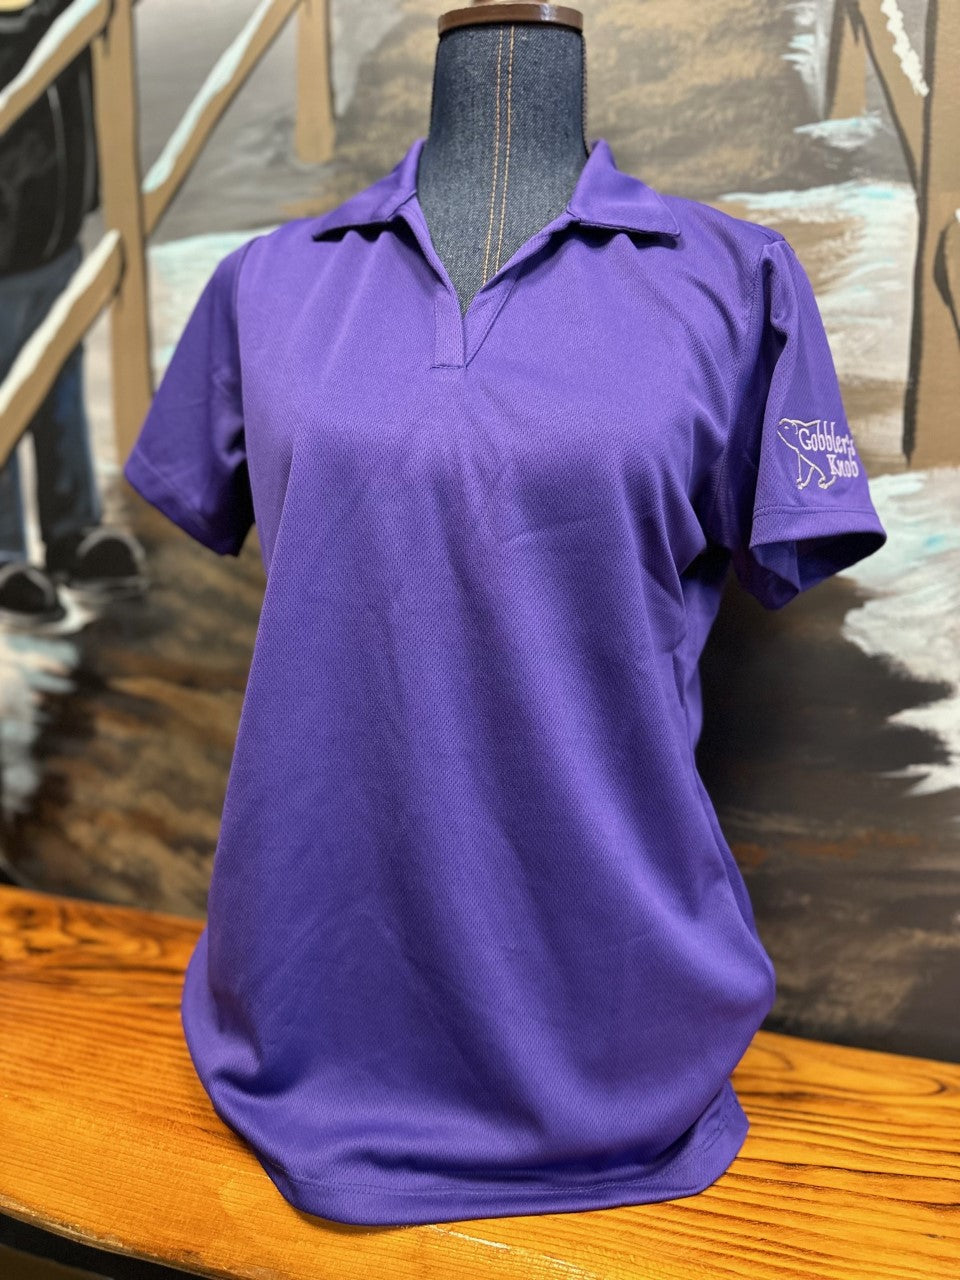 Ladies Purple Gobbler's Knob Golf Polo